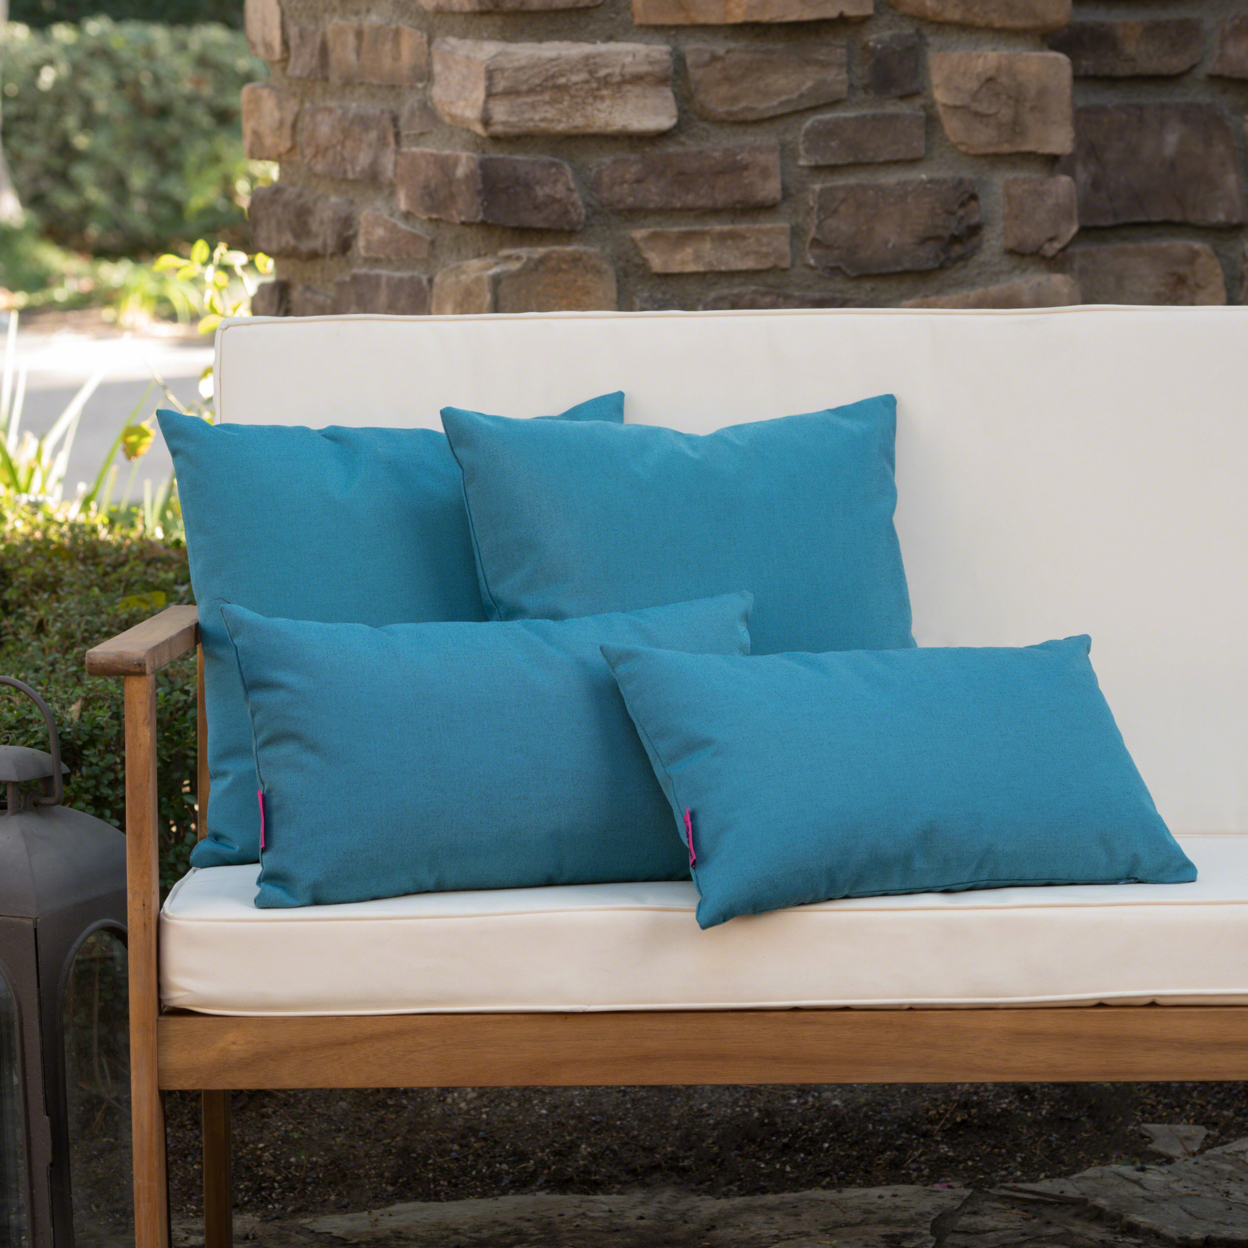 Coronado Outdoor Water Resistant Square And Rectangular Throw Pillows (Set Of 4) - Teal